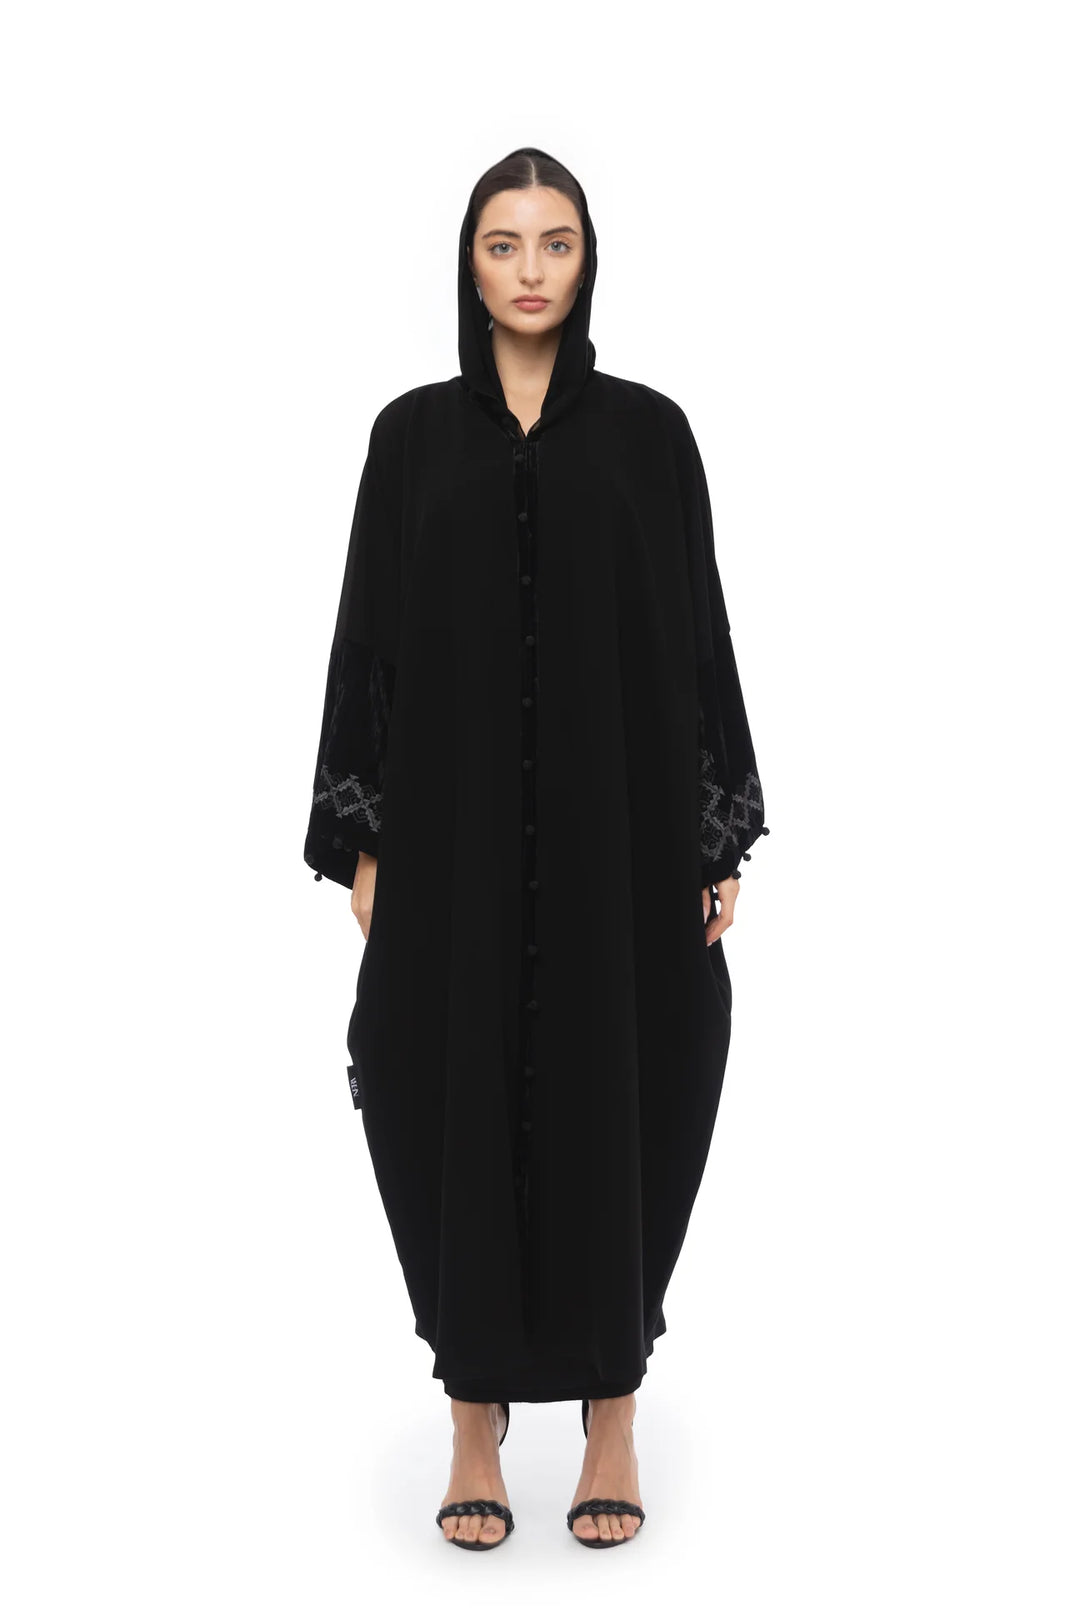 Nera - Velvet Sleeves Moroccan style  C220